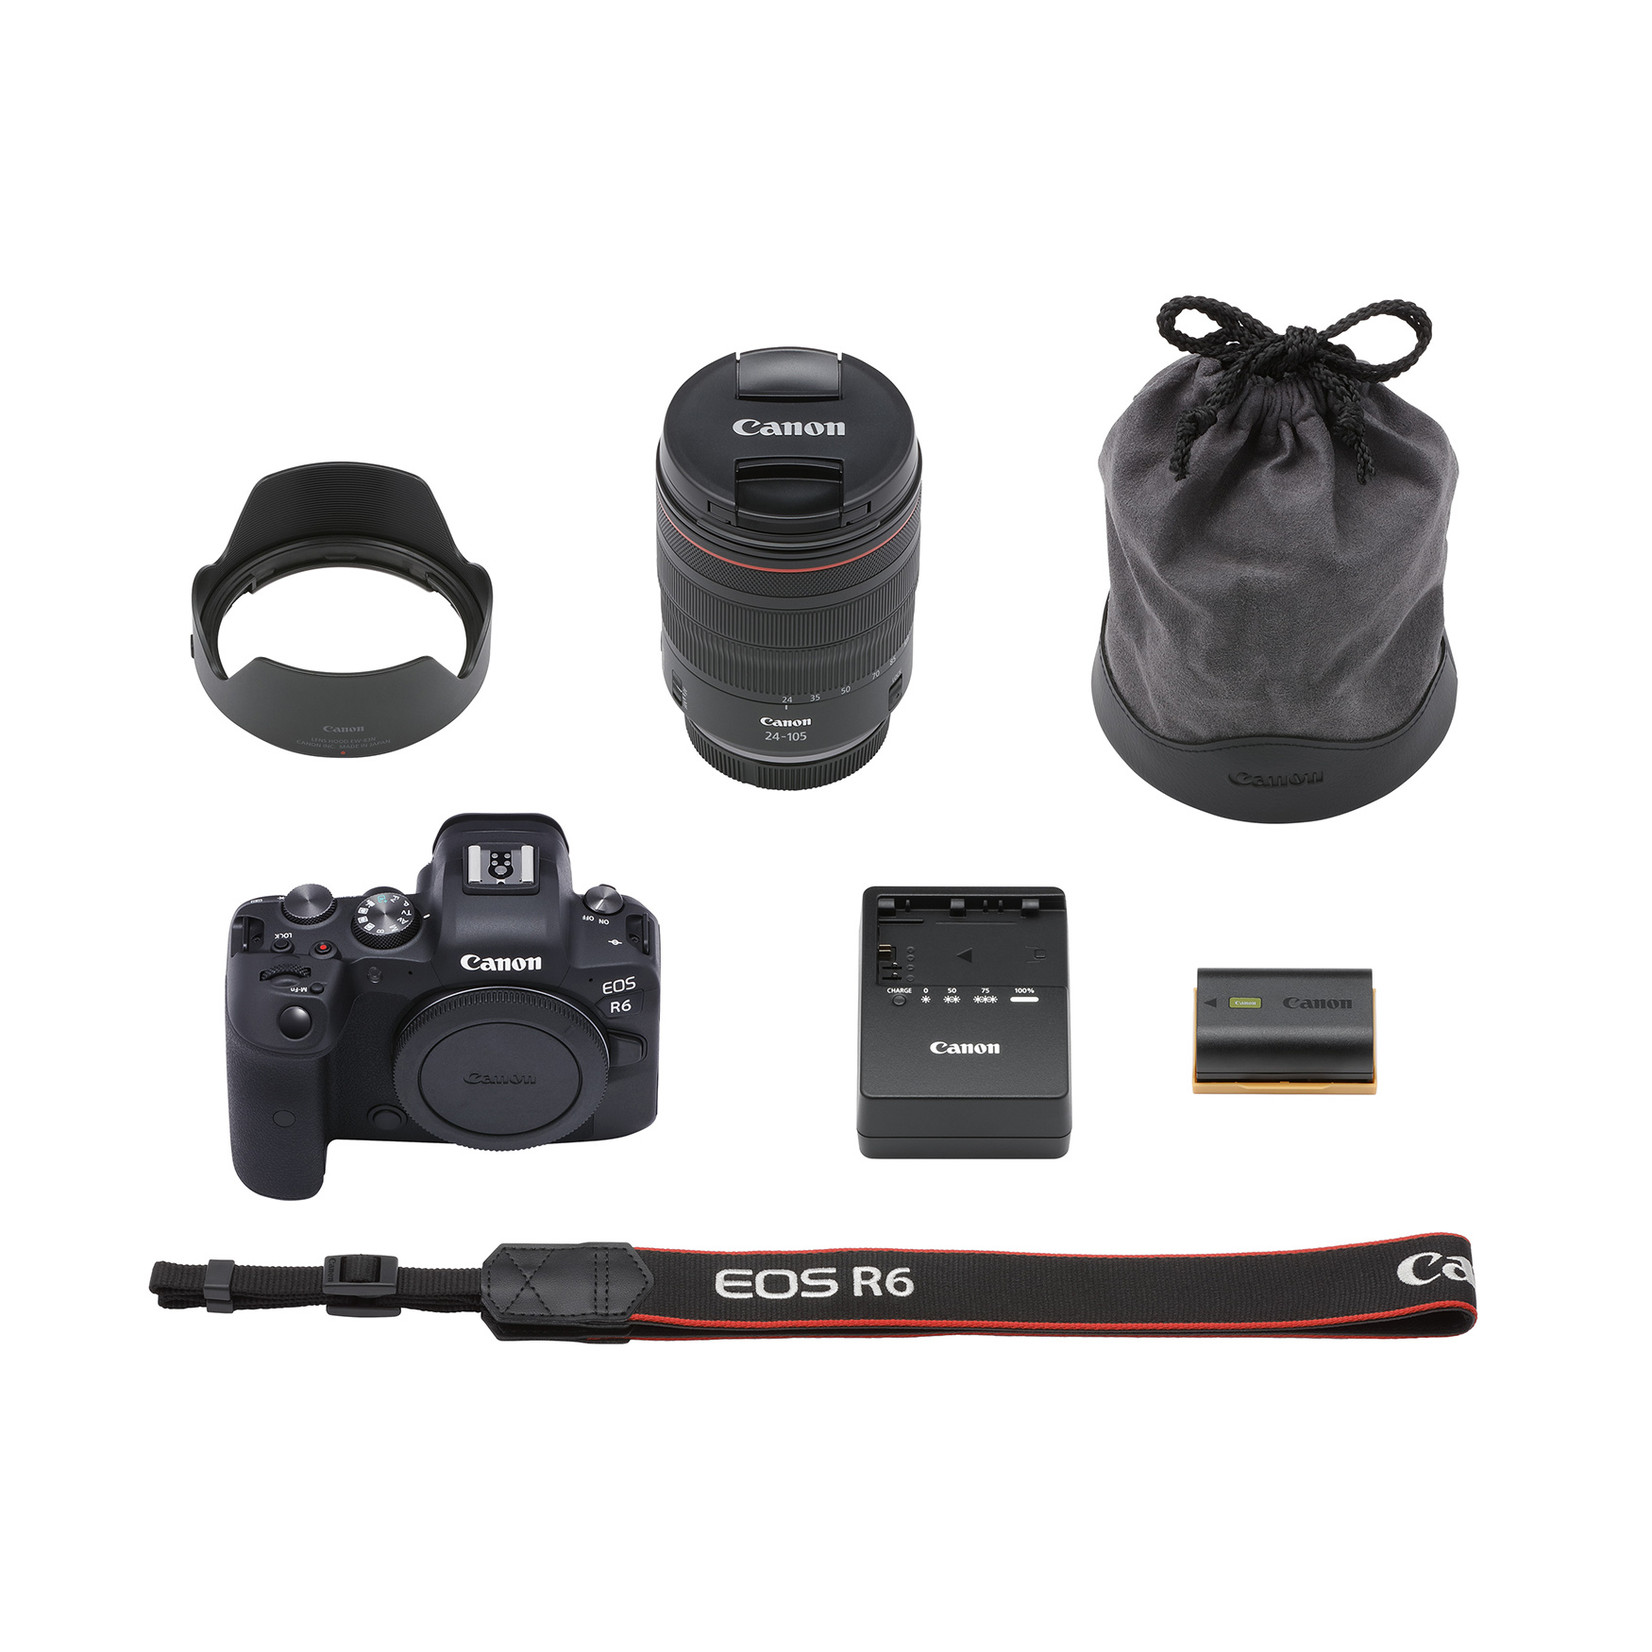 Canon EOS R6 RF24-105mm F4 L IS USM Lens Kit